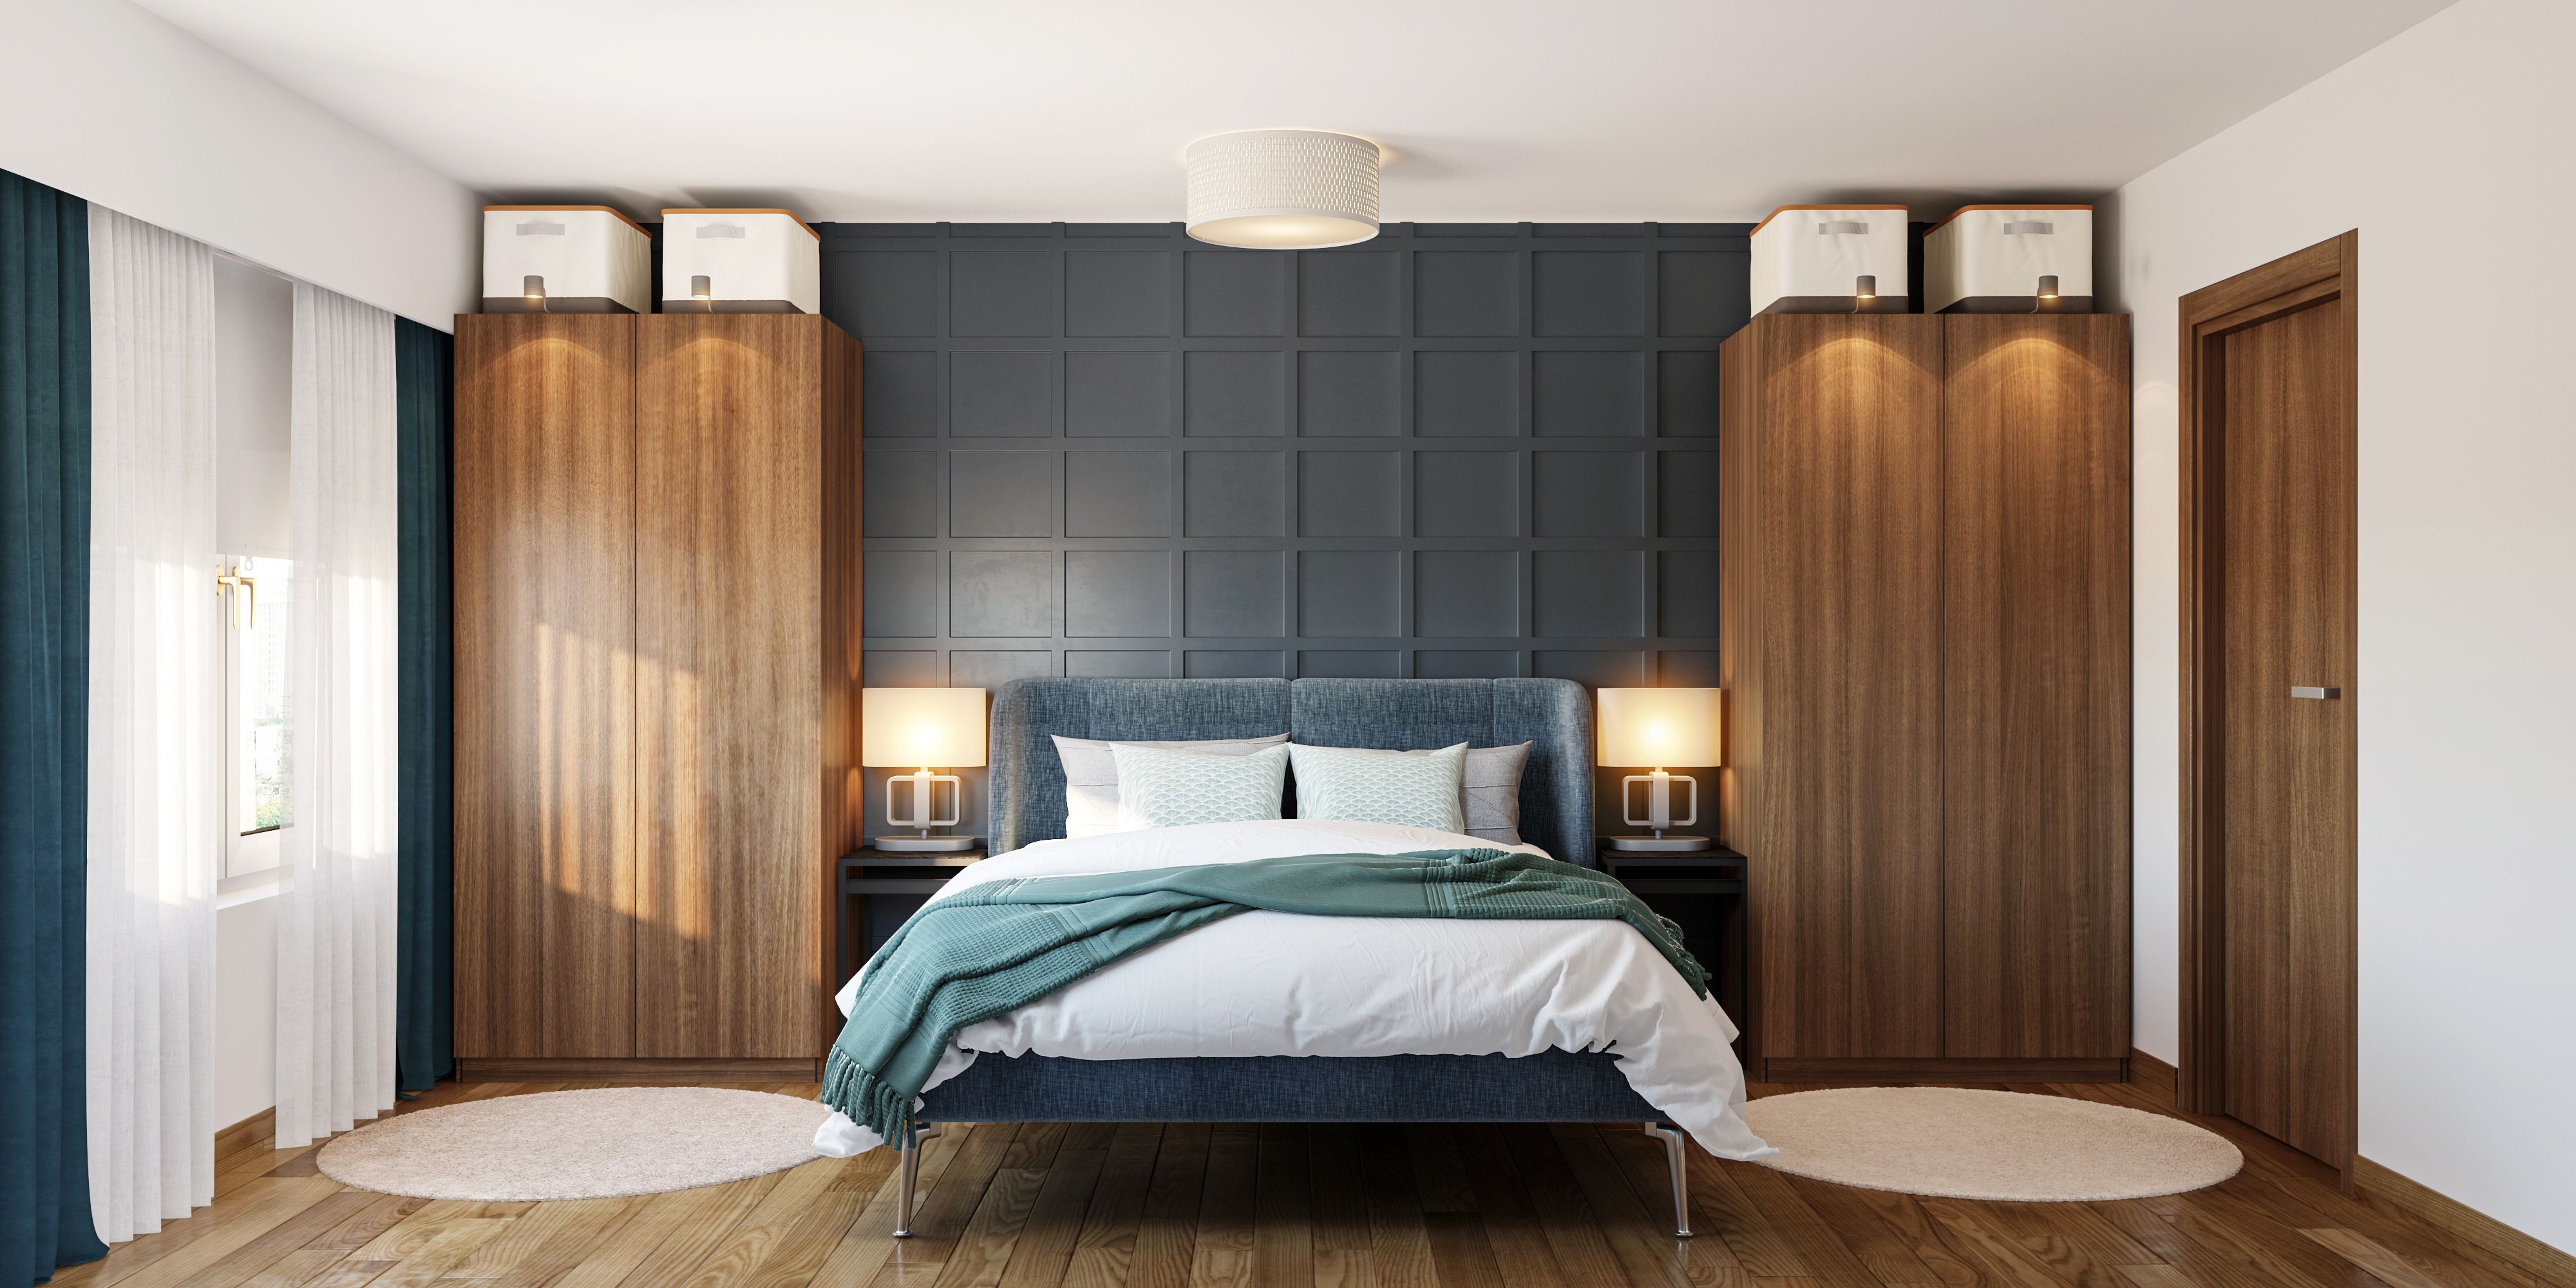 Minimalistic Master Bedroom Design With Contemporary Decor